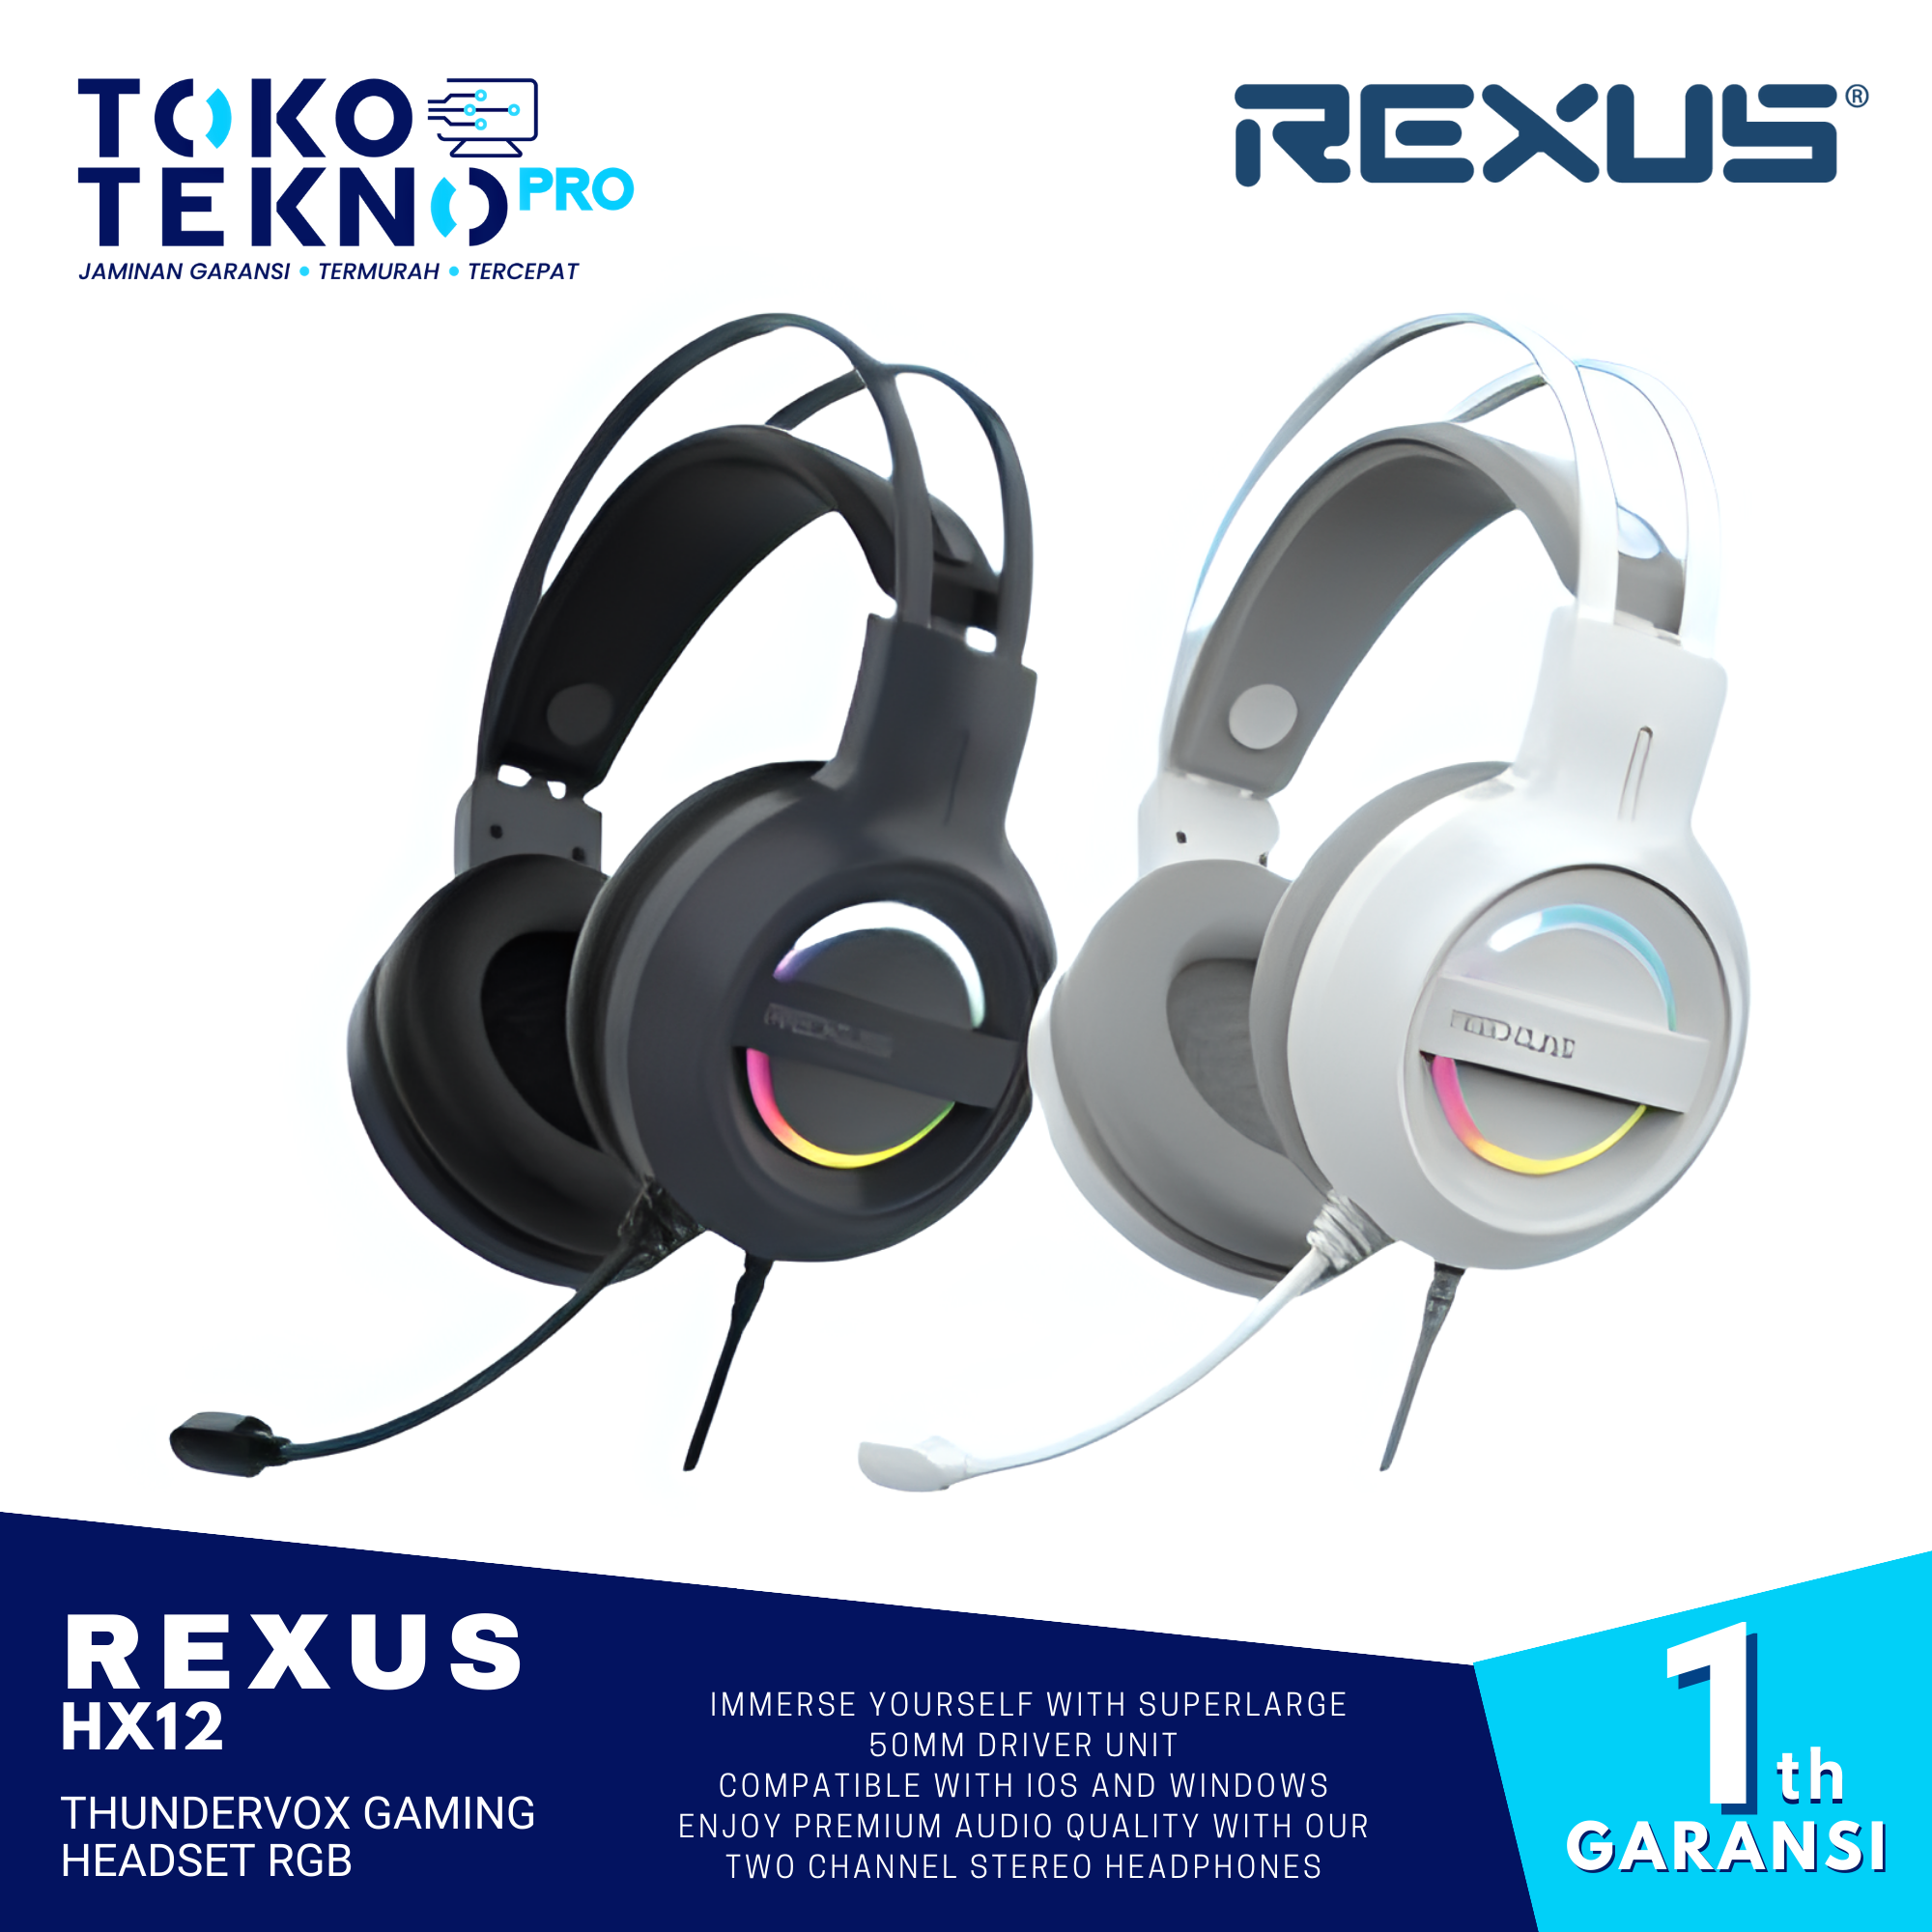 Rexus HX12 / HX-12 Thundervox Gaming Headset RGB With 50mm Driver